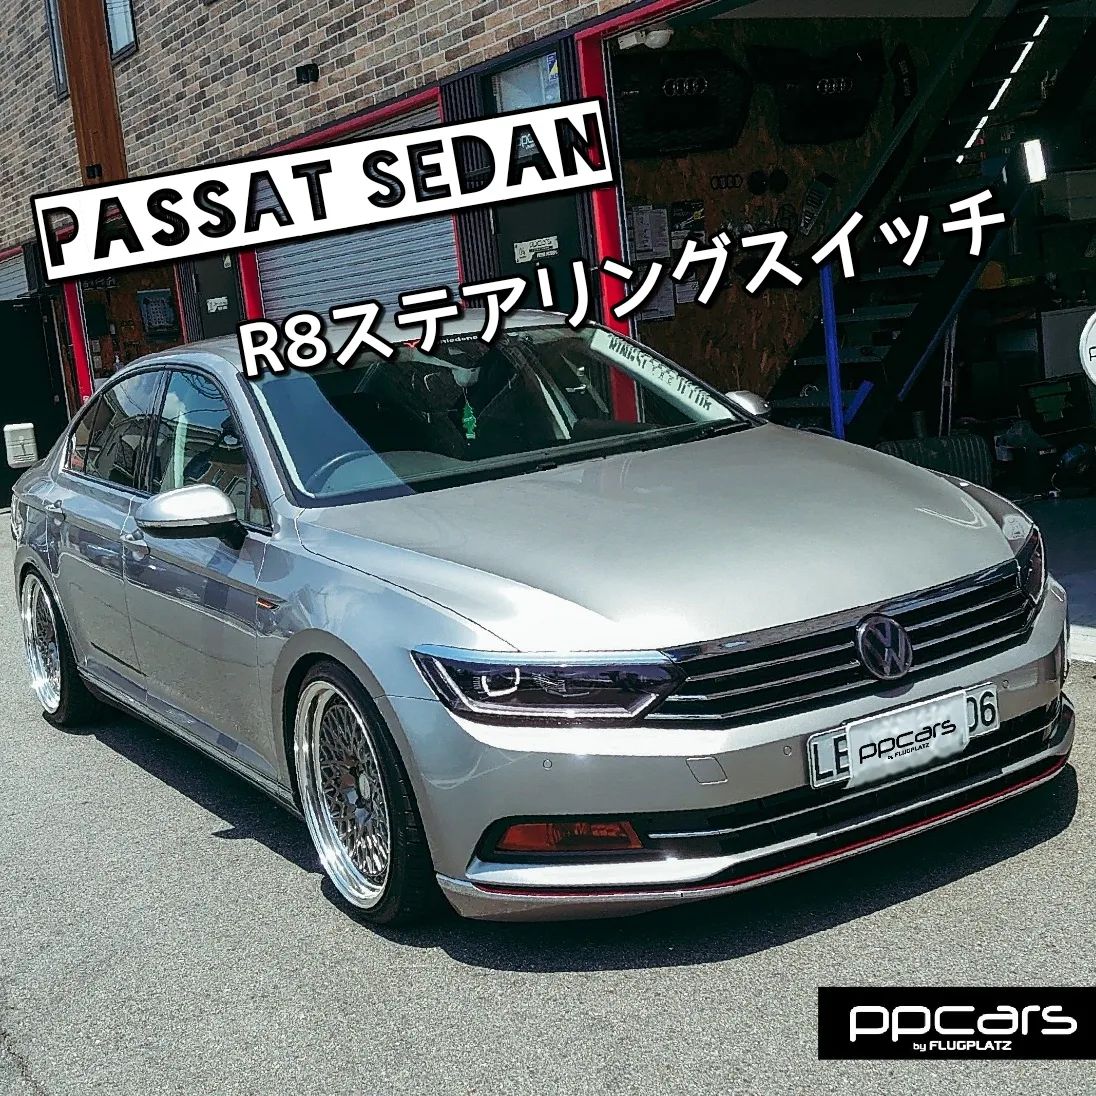 Passat (3G/B8) Sedan x R8ステアリングスイッチ